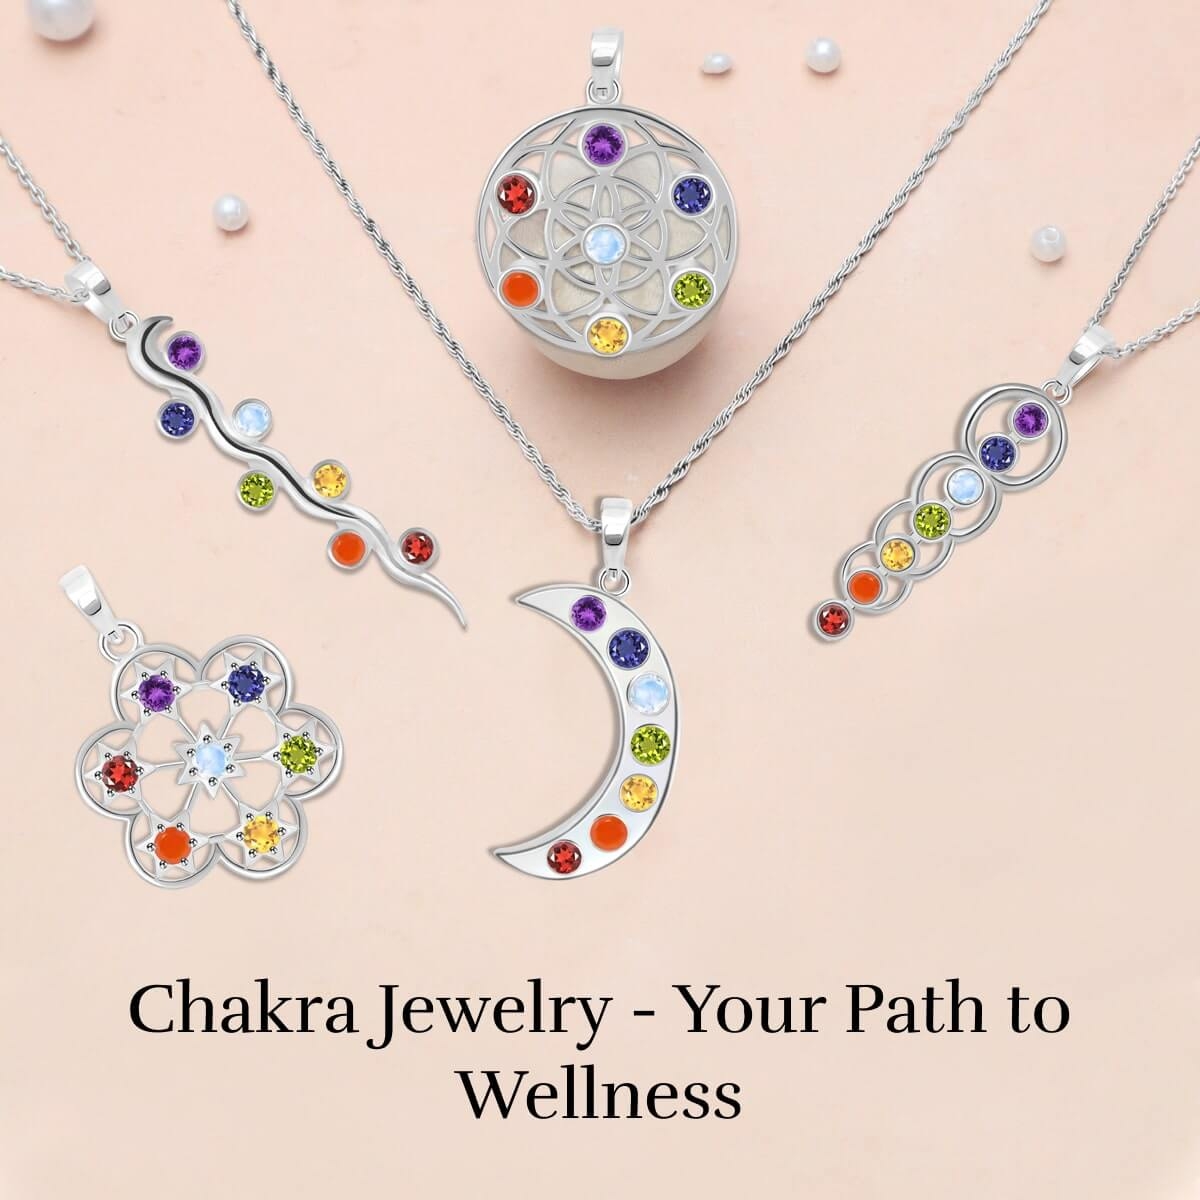 Chakra jewelry: Healing properties